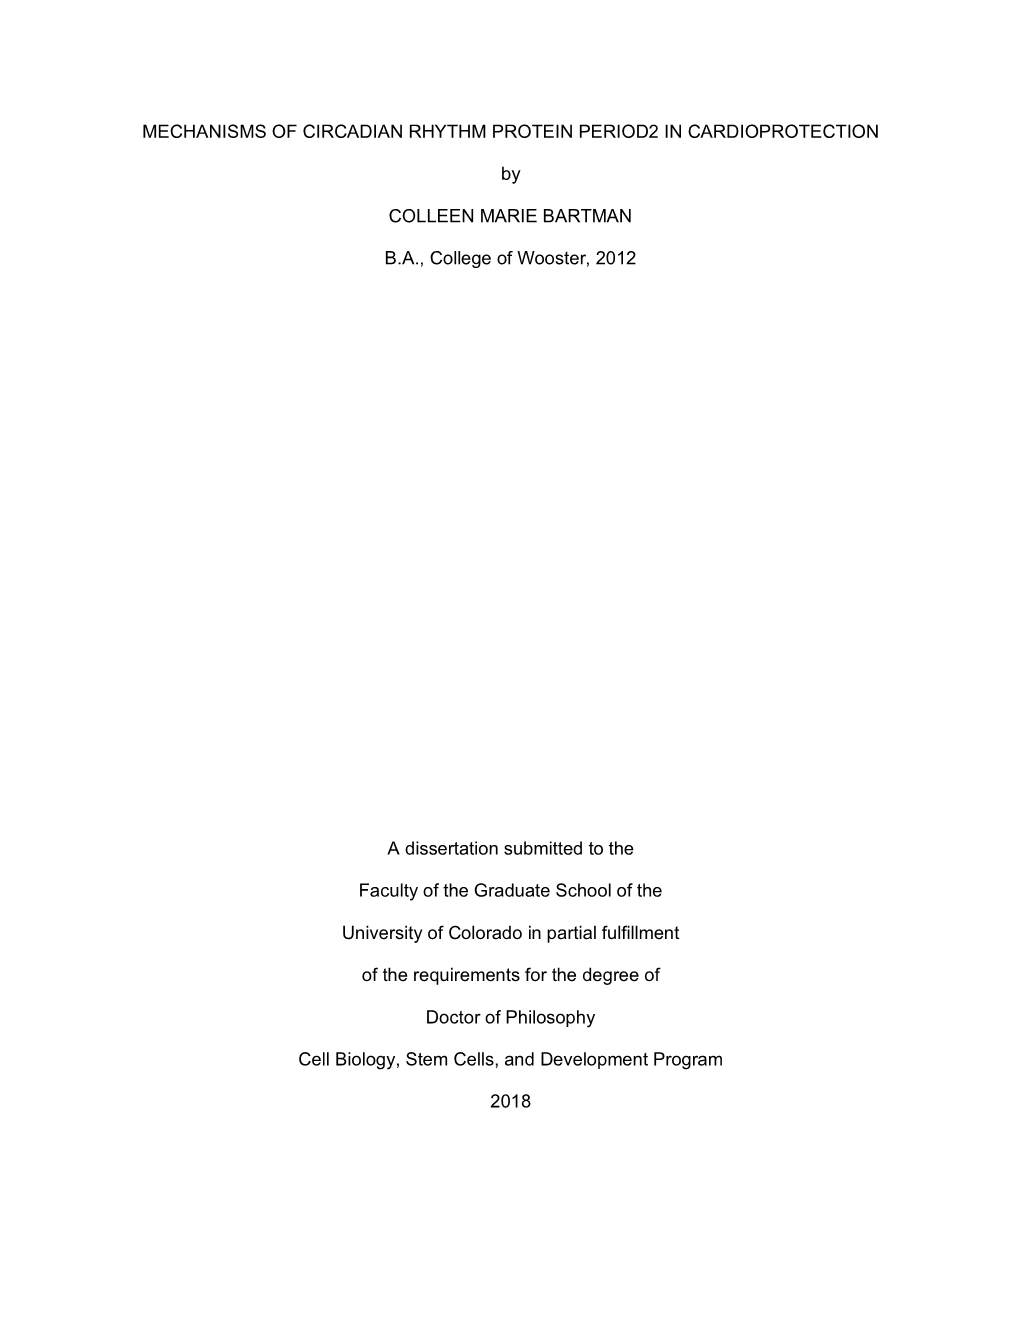 Bartman Dissertation 073018 for Graduate